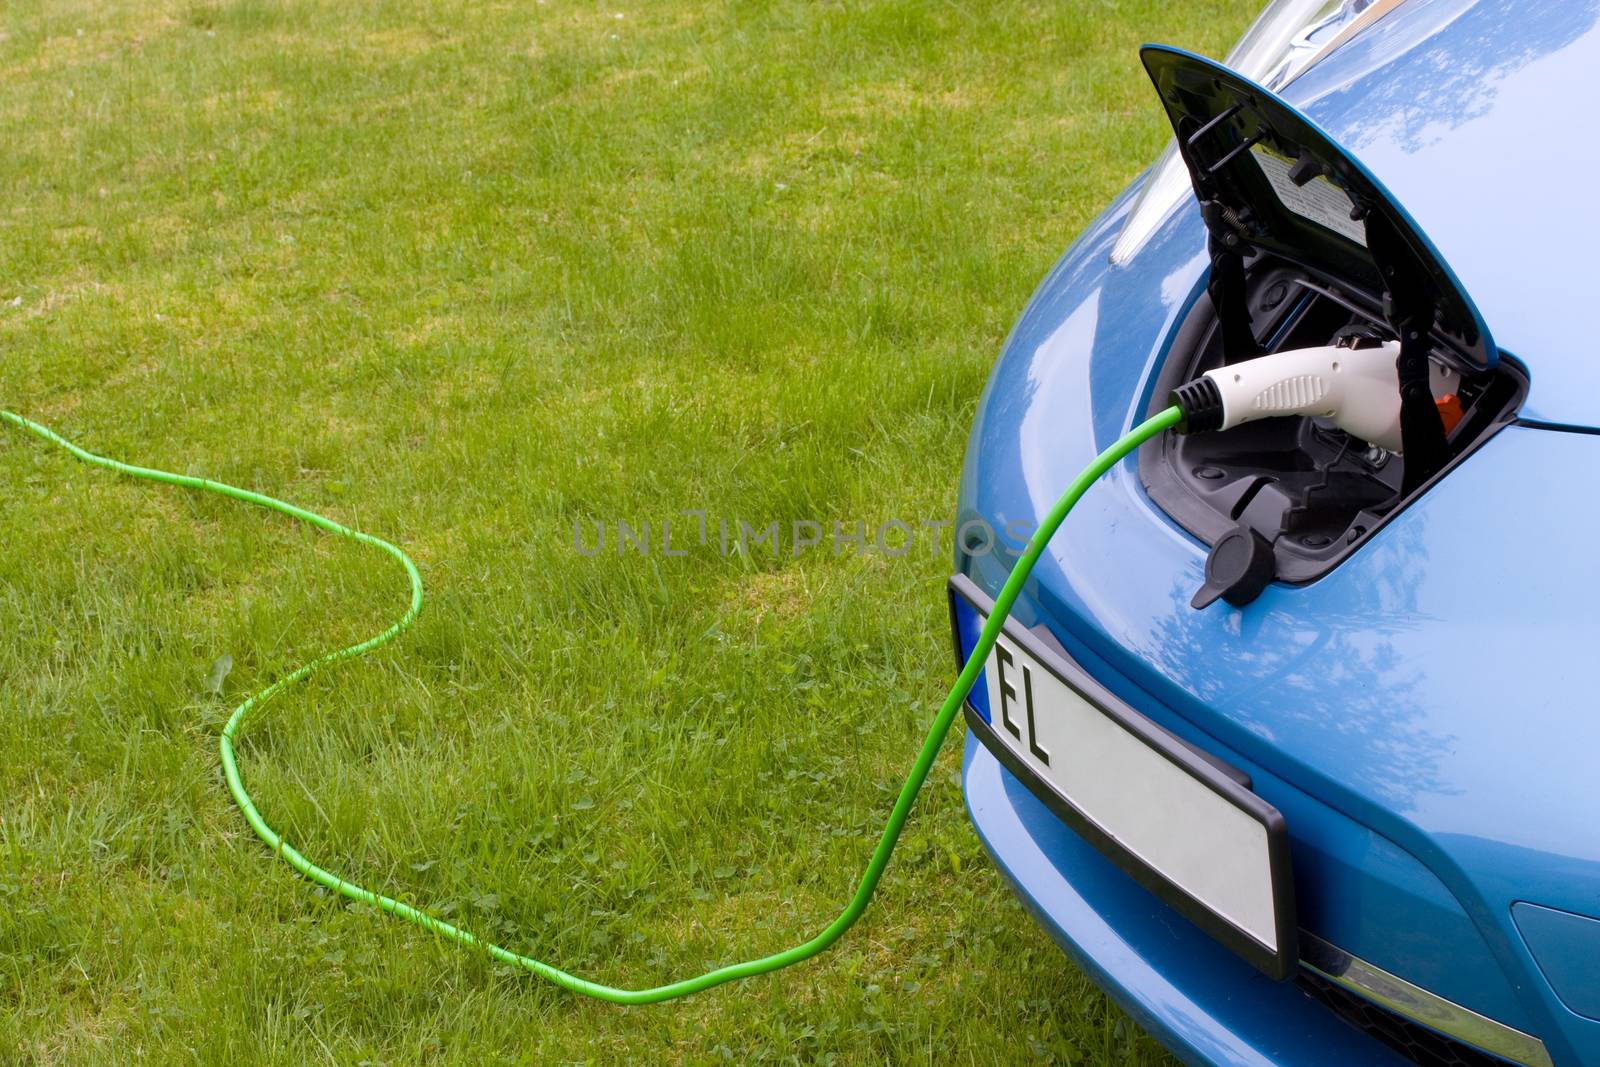 Charging a modern electric car